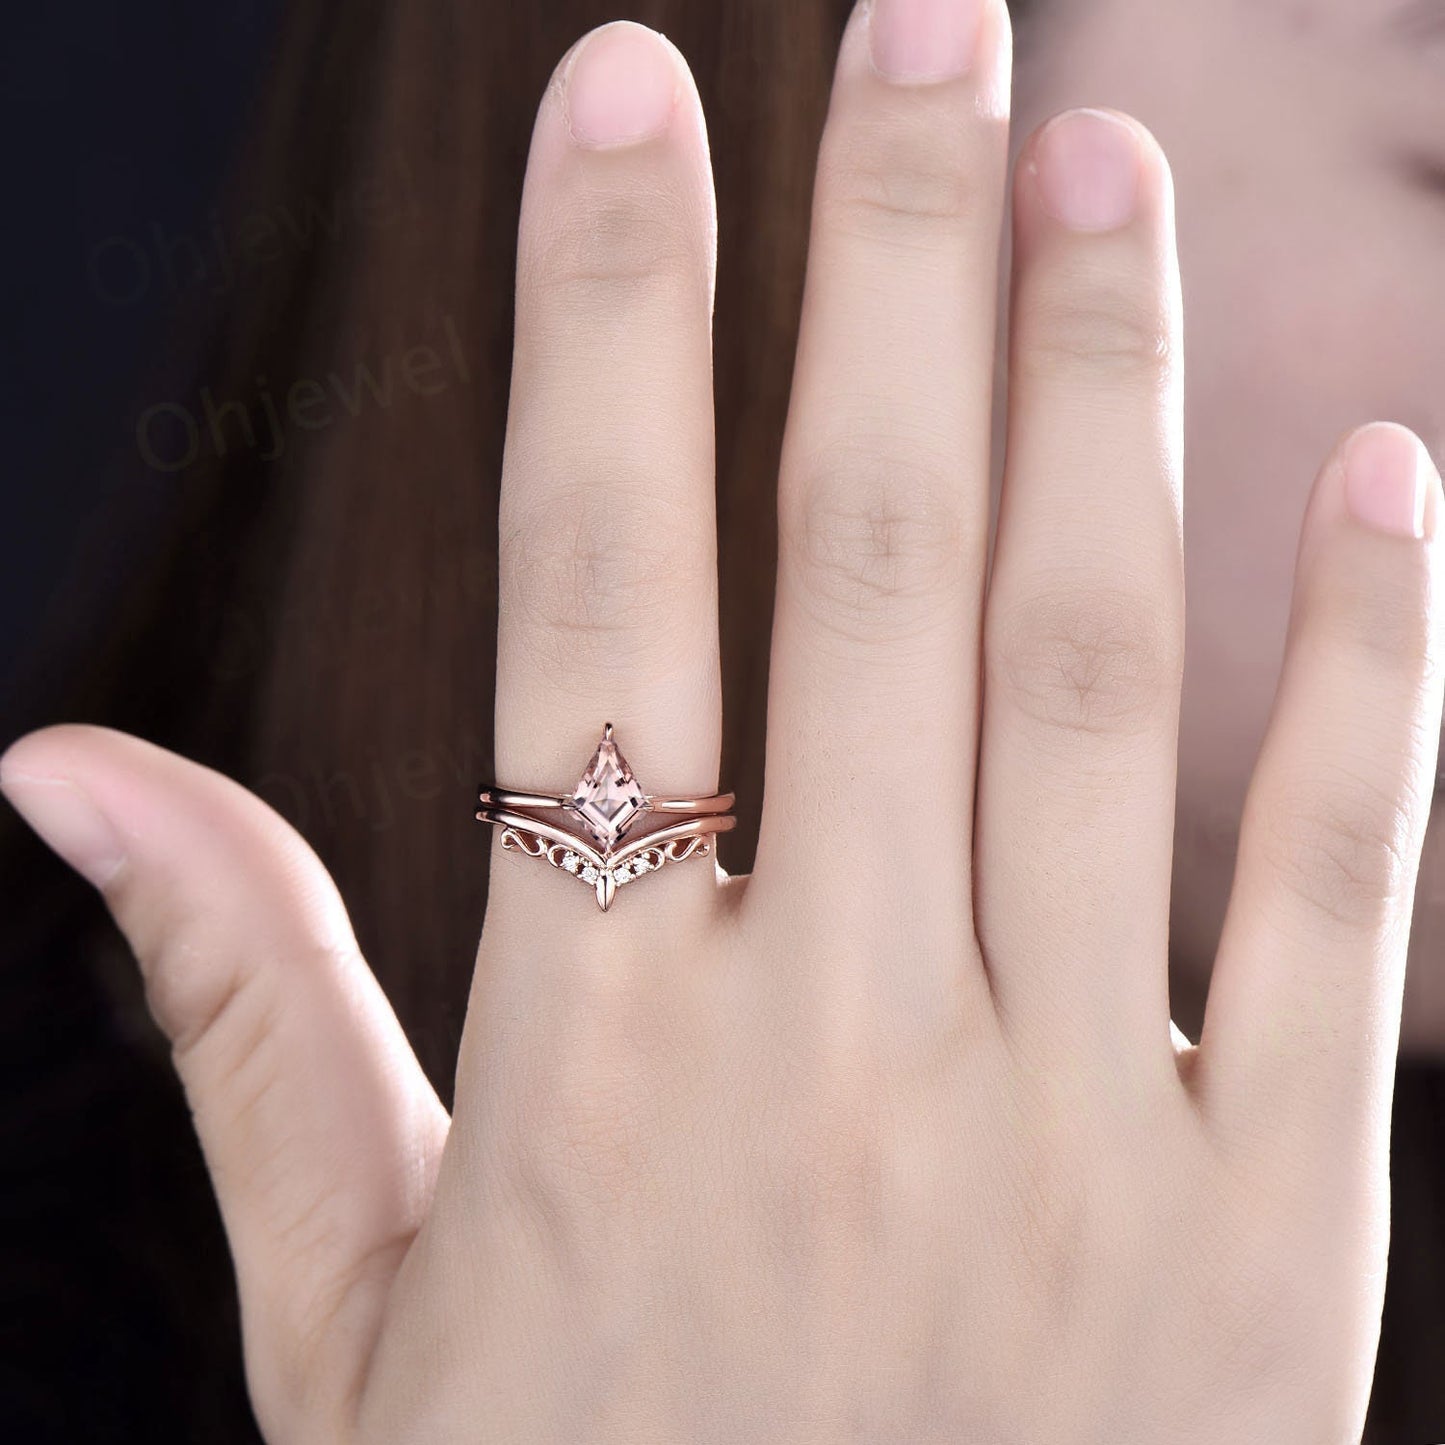 1ct kite cut pink morganite ring rose gold unique solitaire engagement ring set vintage style diamond wedding ring band women bridal set